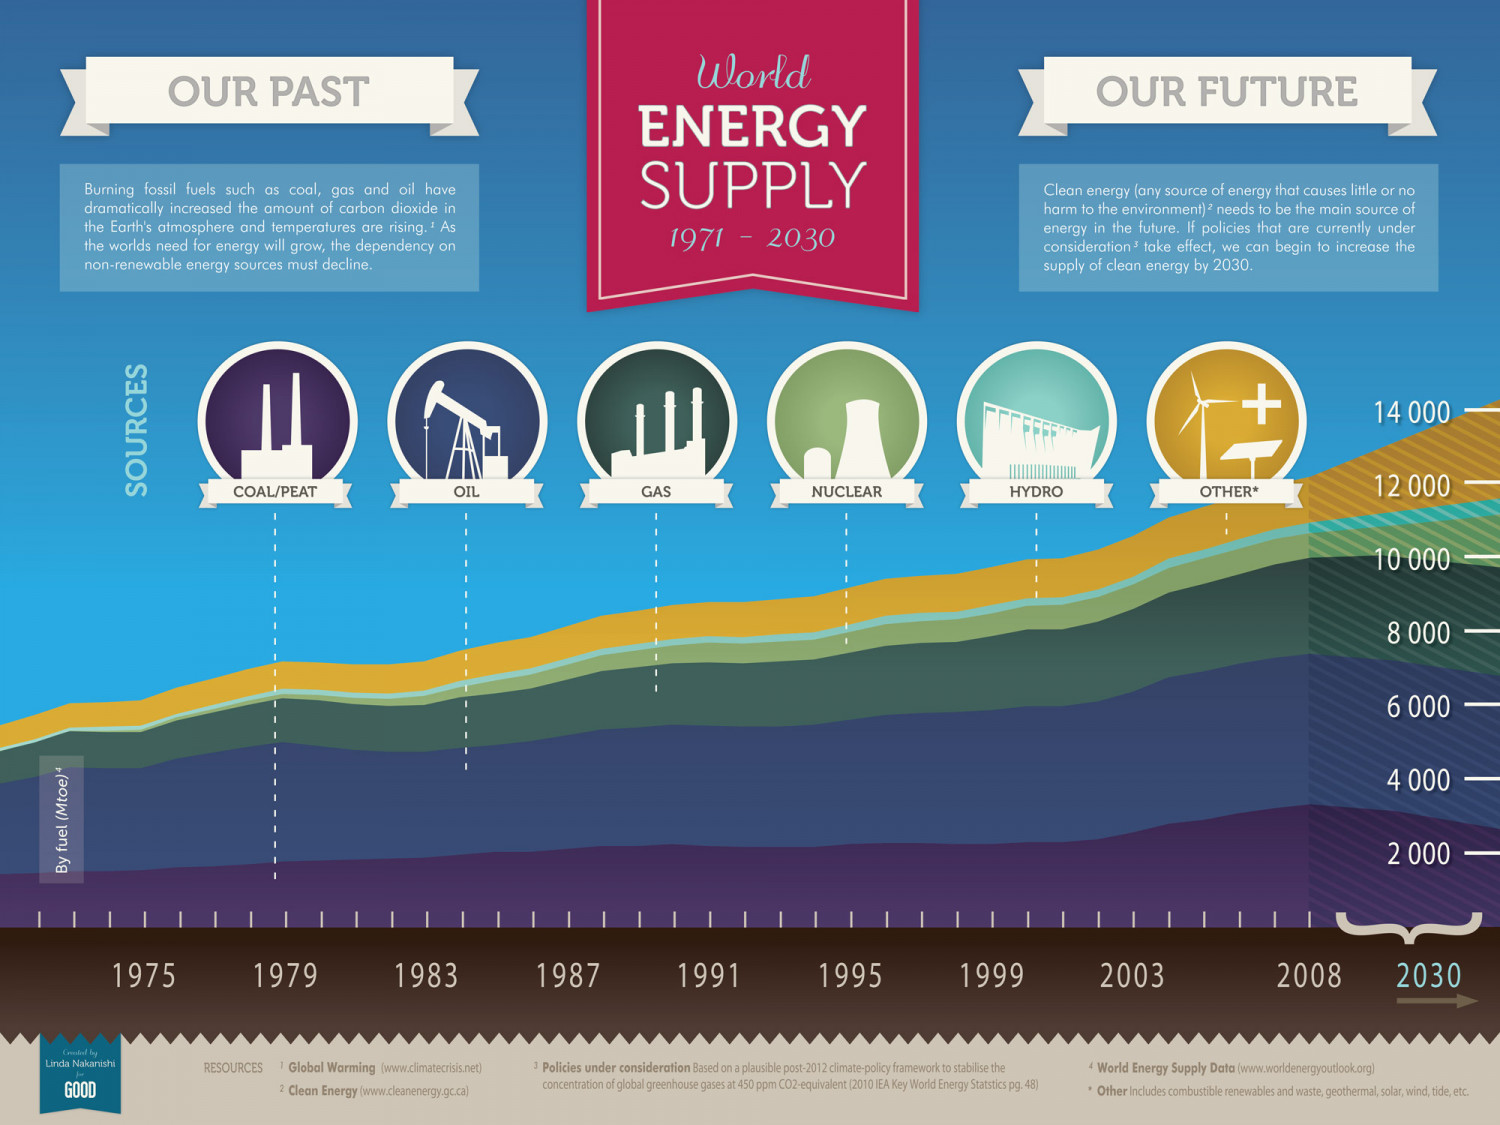 World Energy Supply 1971 - 2030 Infographic